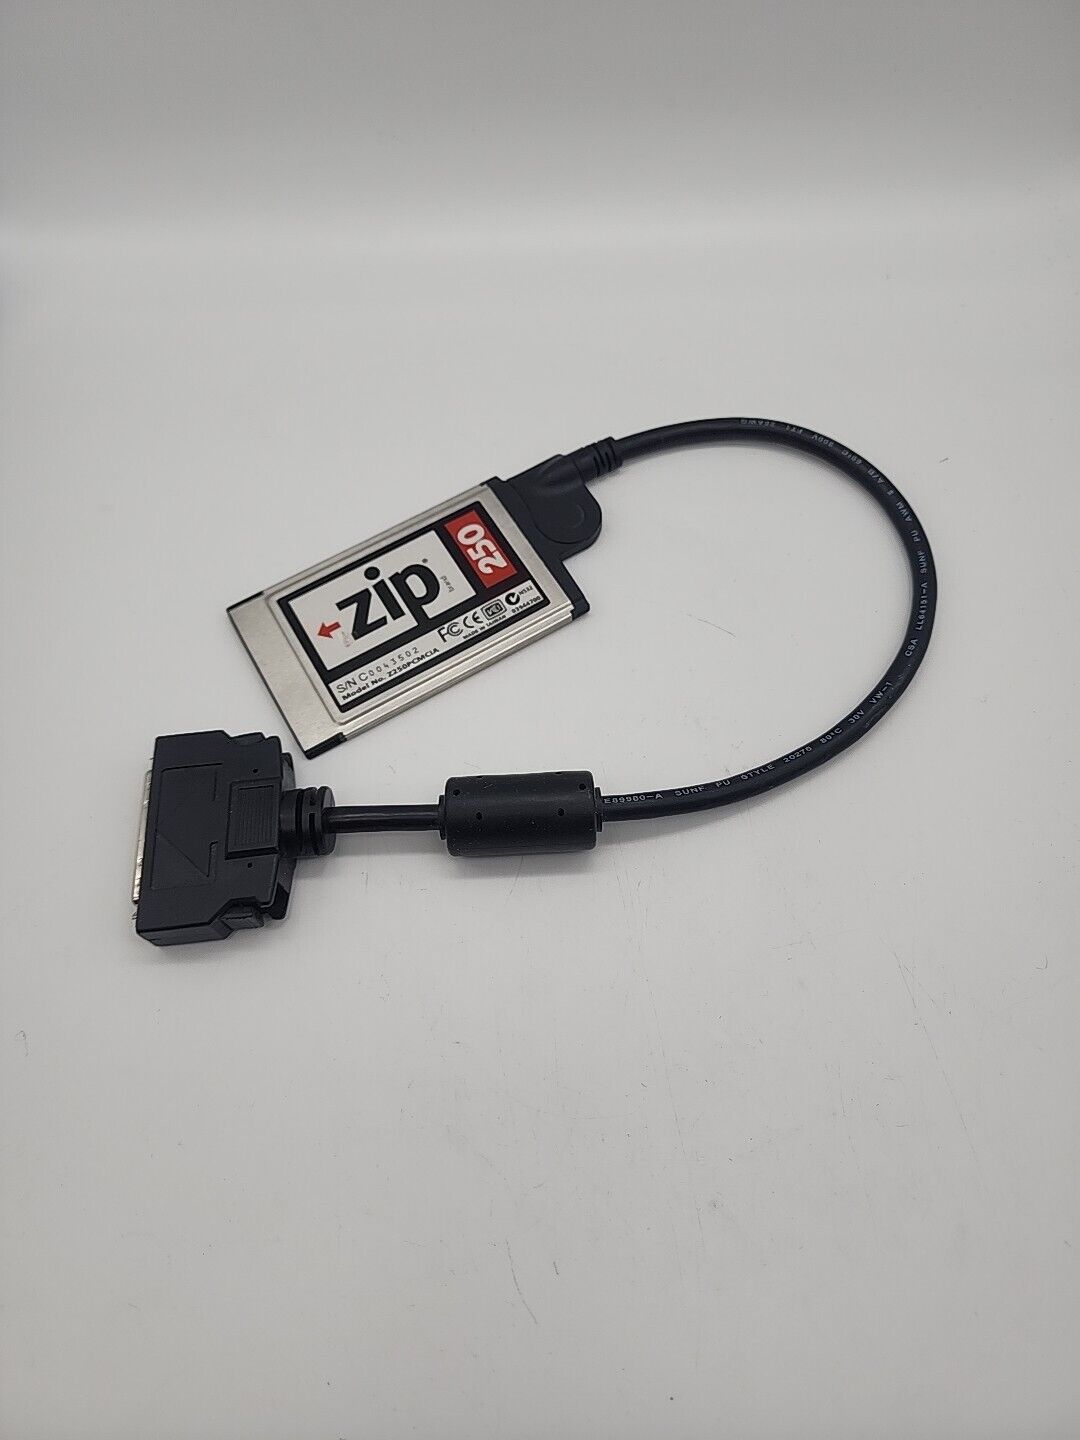 Iomega Zip 250 Drive PCMCIA Card Adapter (Parallel to PCMCIA ) Z250PCMCIA